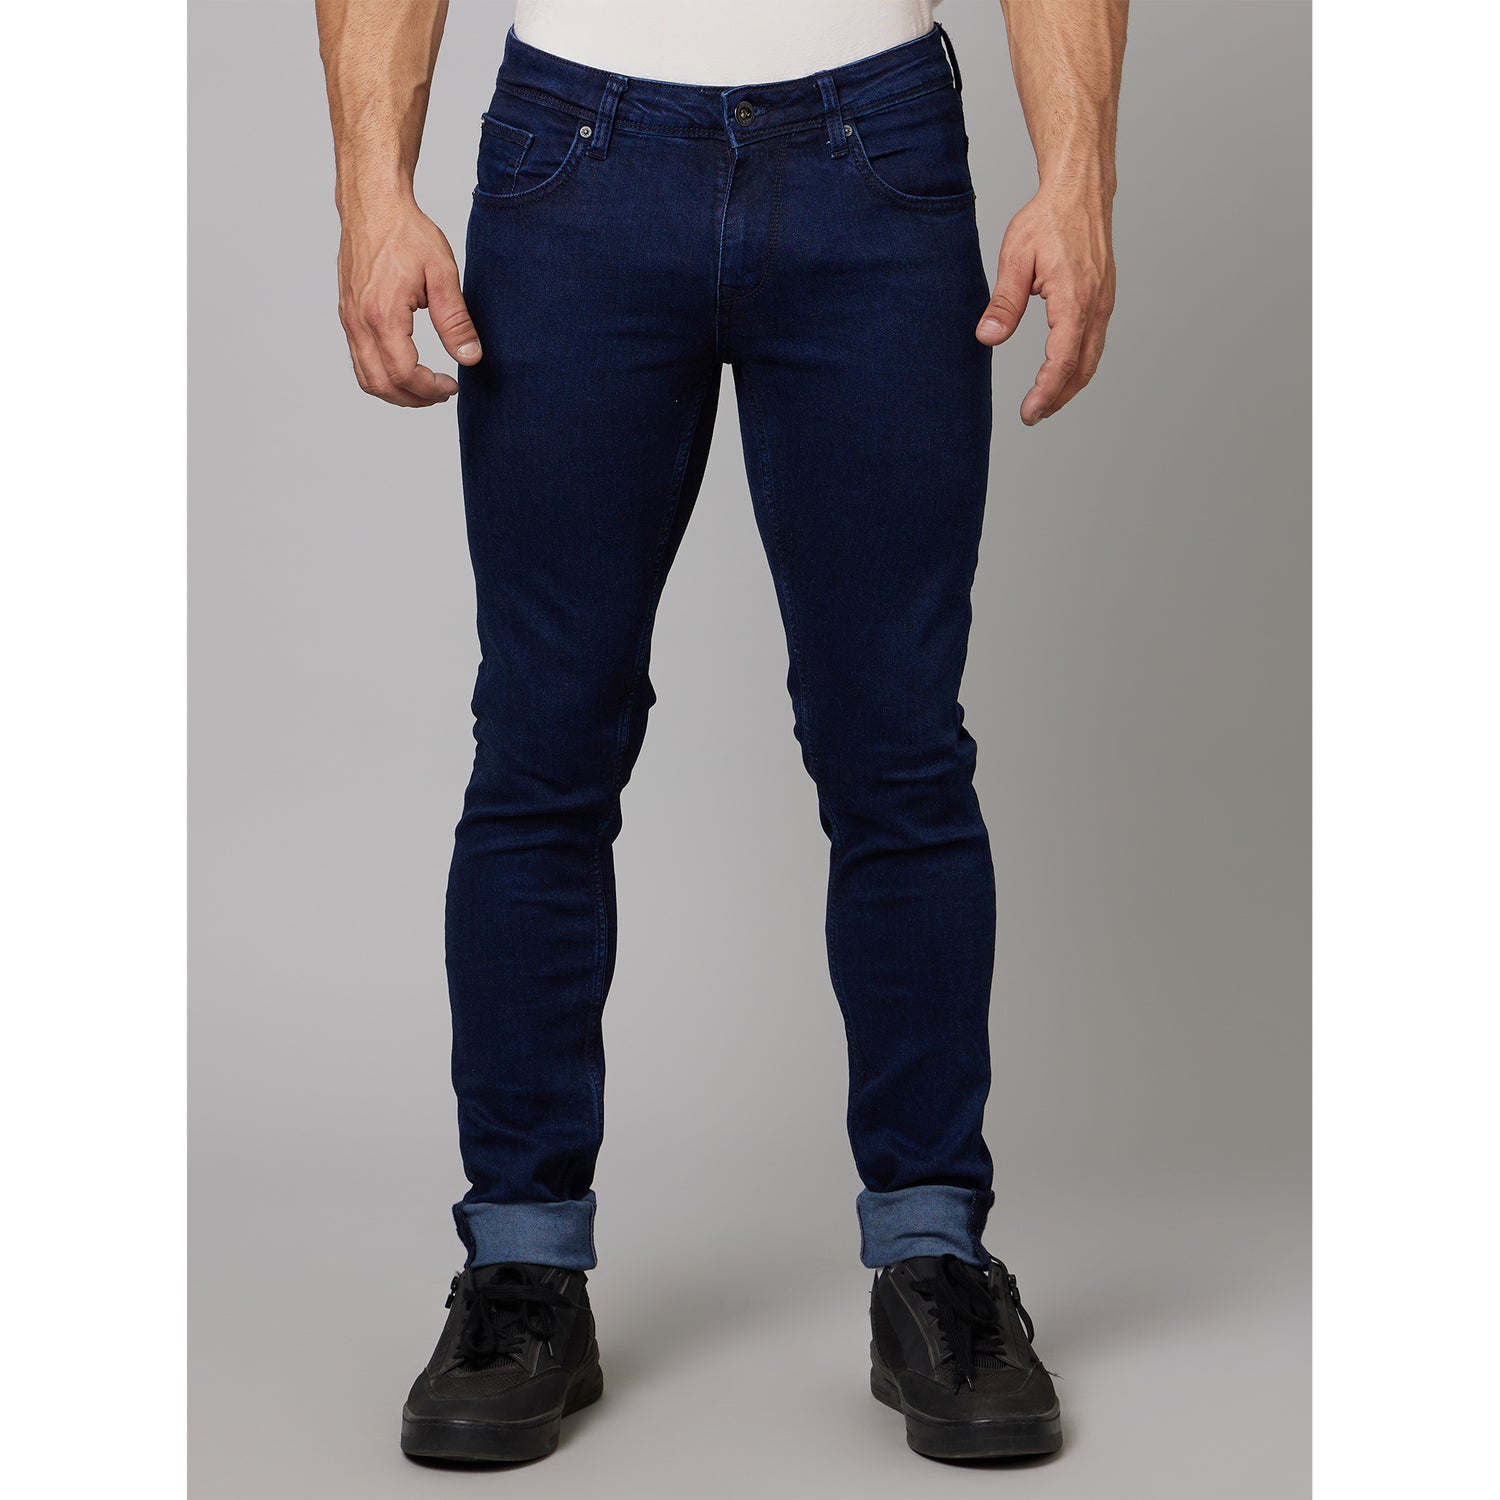 Navy Blue Mid-Rise Jean Skinny Fit Jeans (COECODARK145)